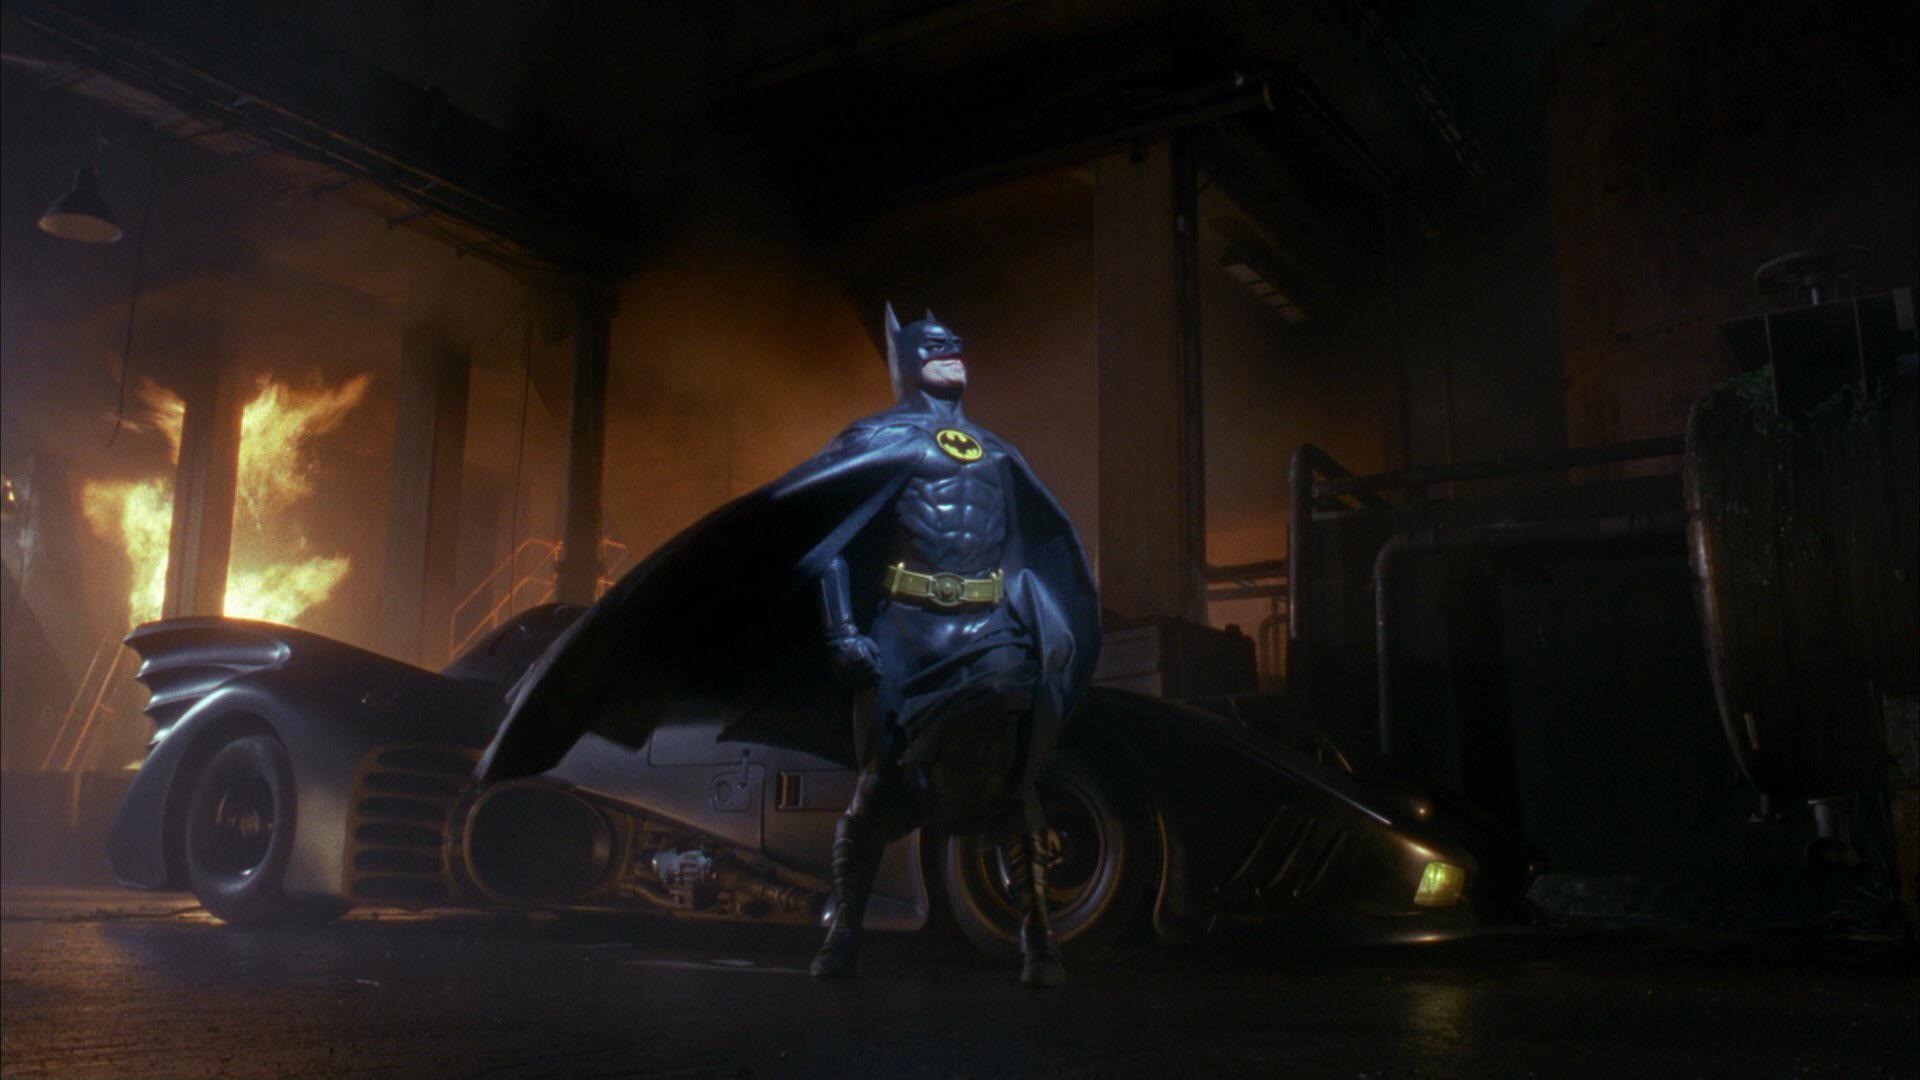 On June 19th 1989 Tim Burton's Batman had its premiere. HAPPY 30th